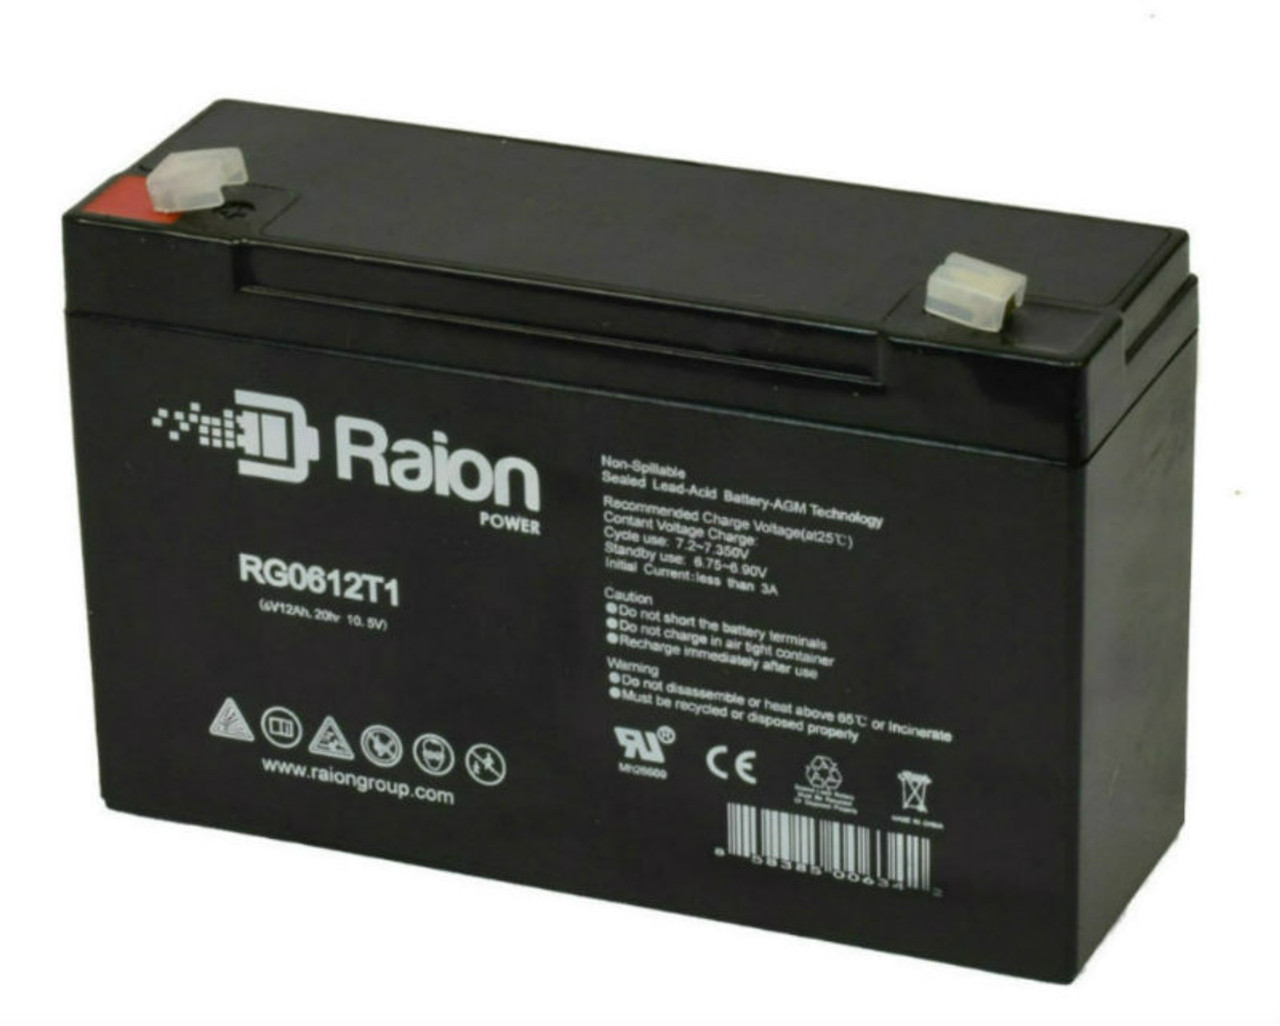 Raion Power RG06120T1 Replacement 6V 12Ah Emergency Light Battery for Sonnenschein CR612